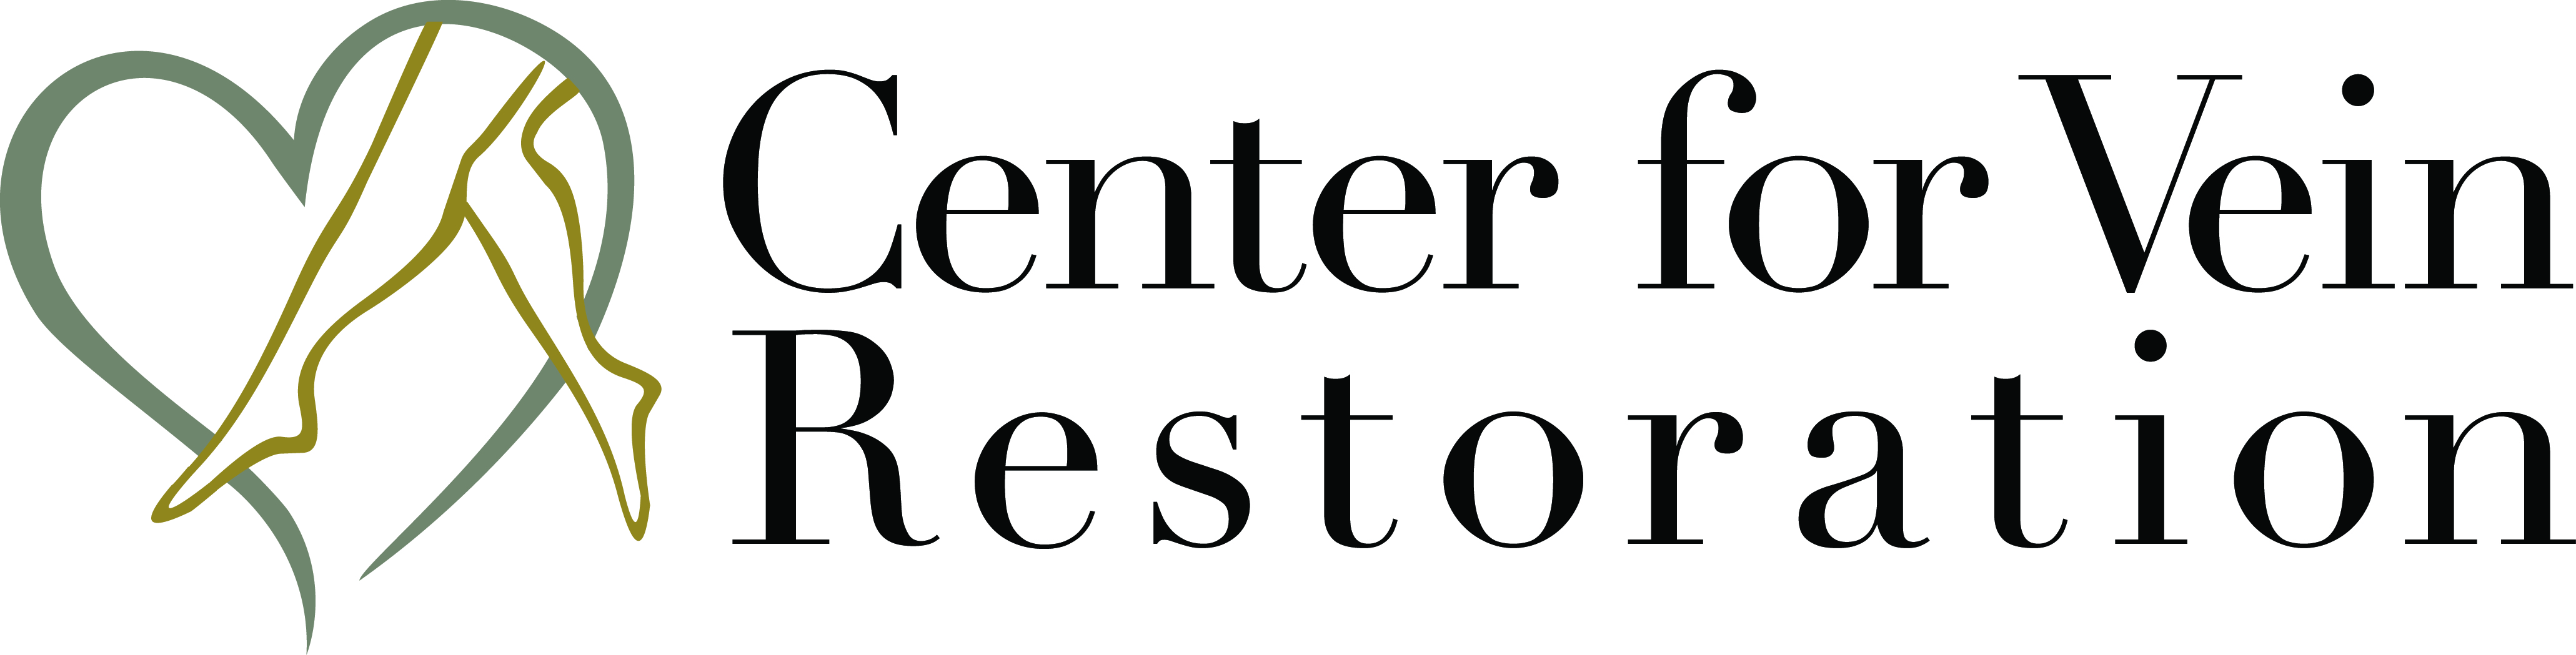 Center for Vein Restoration Logo2